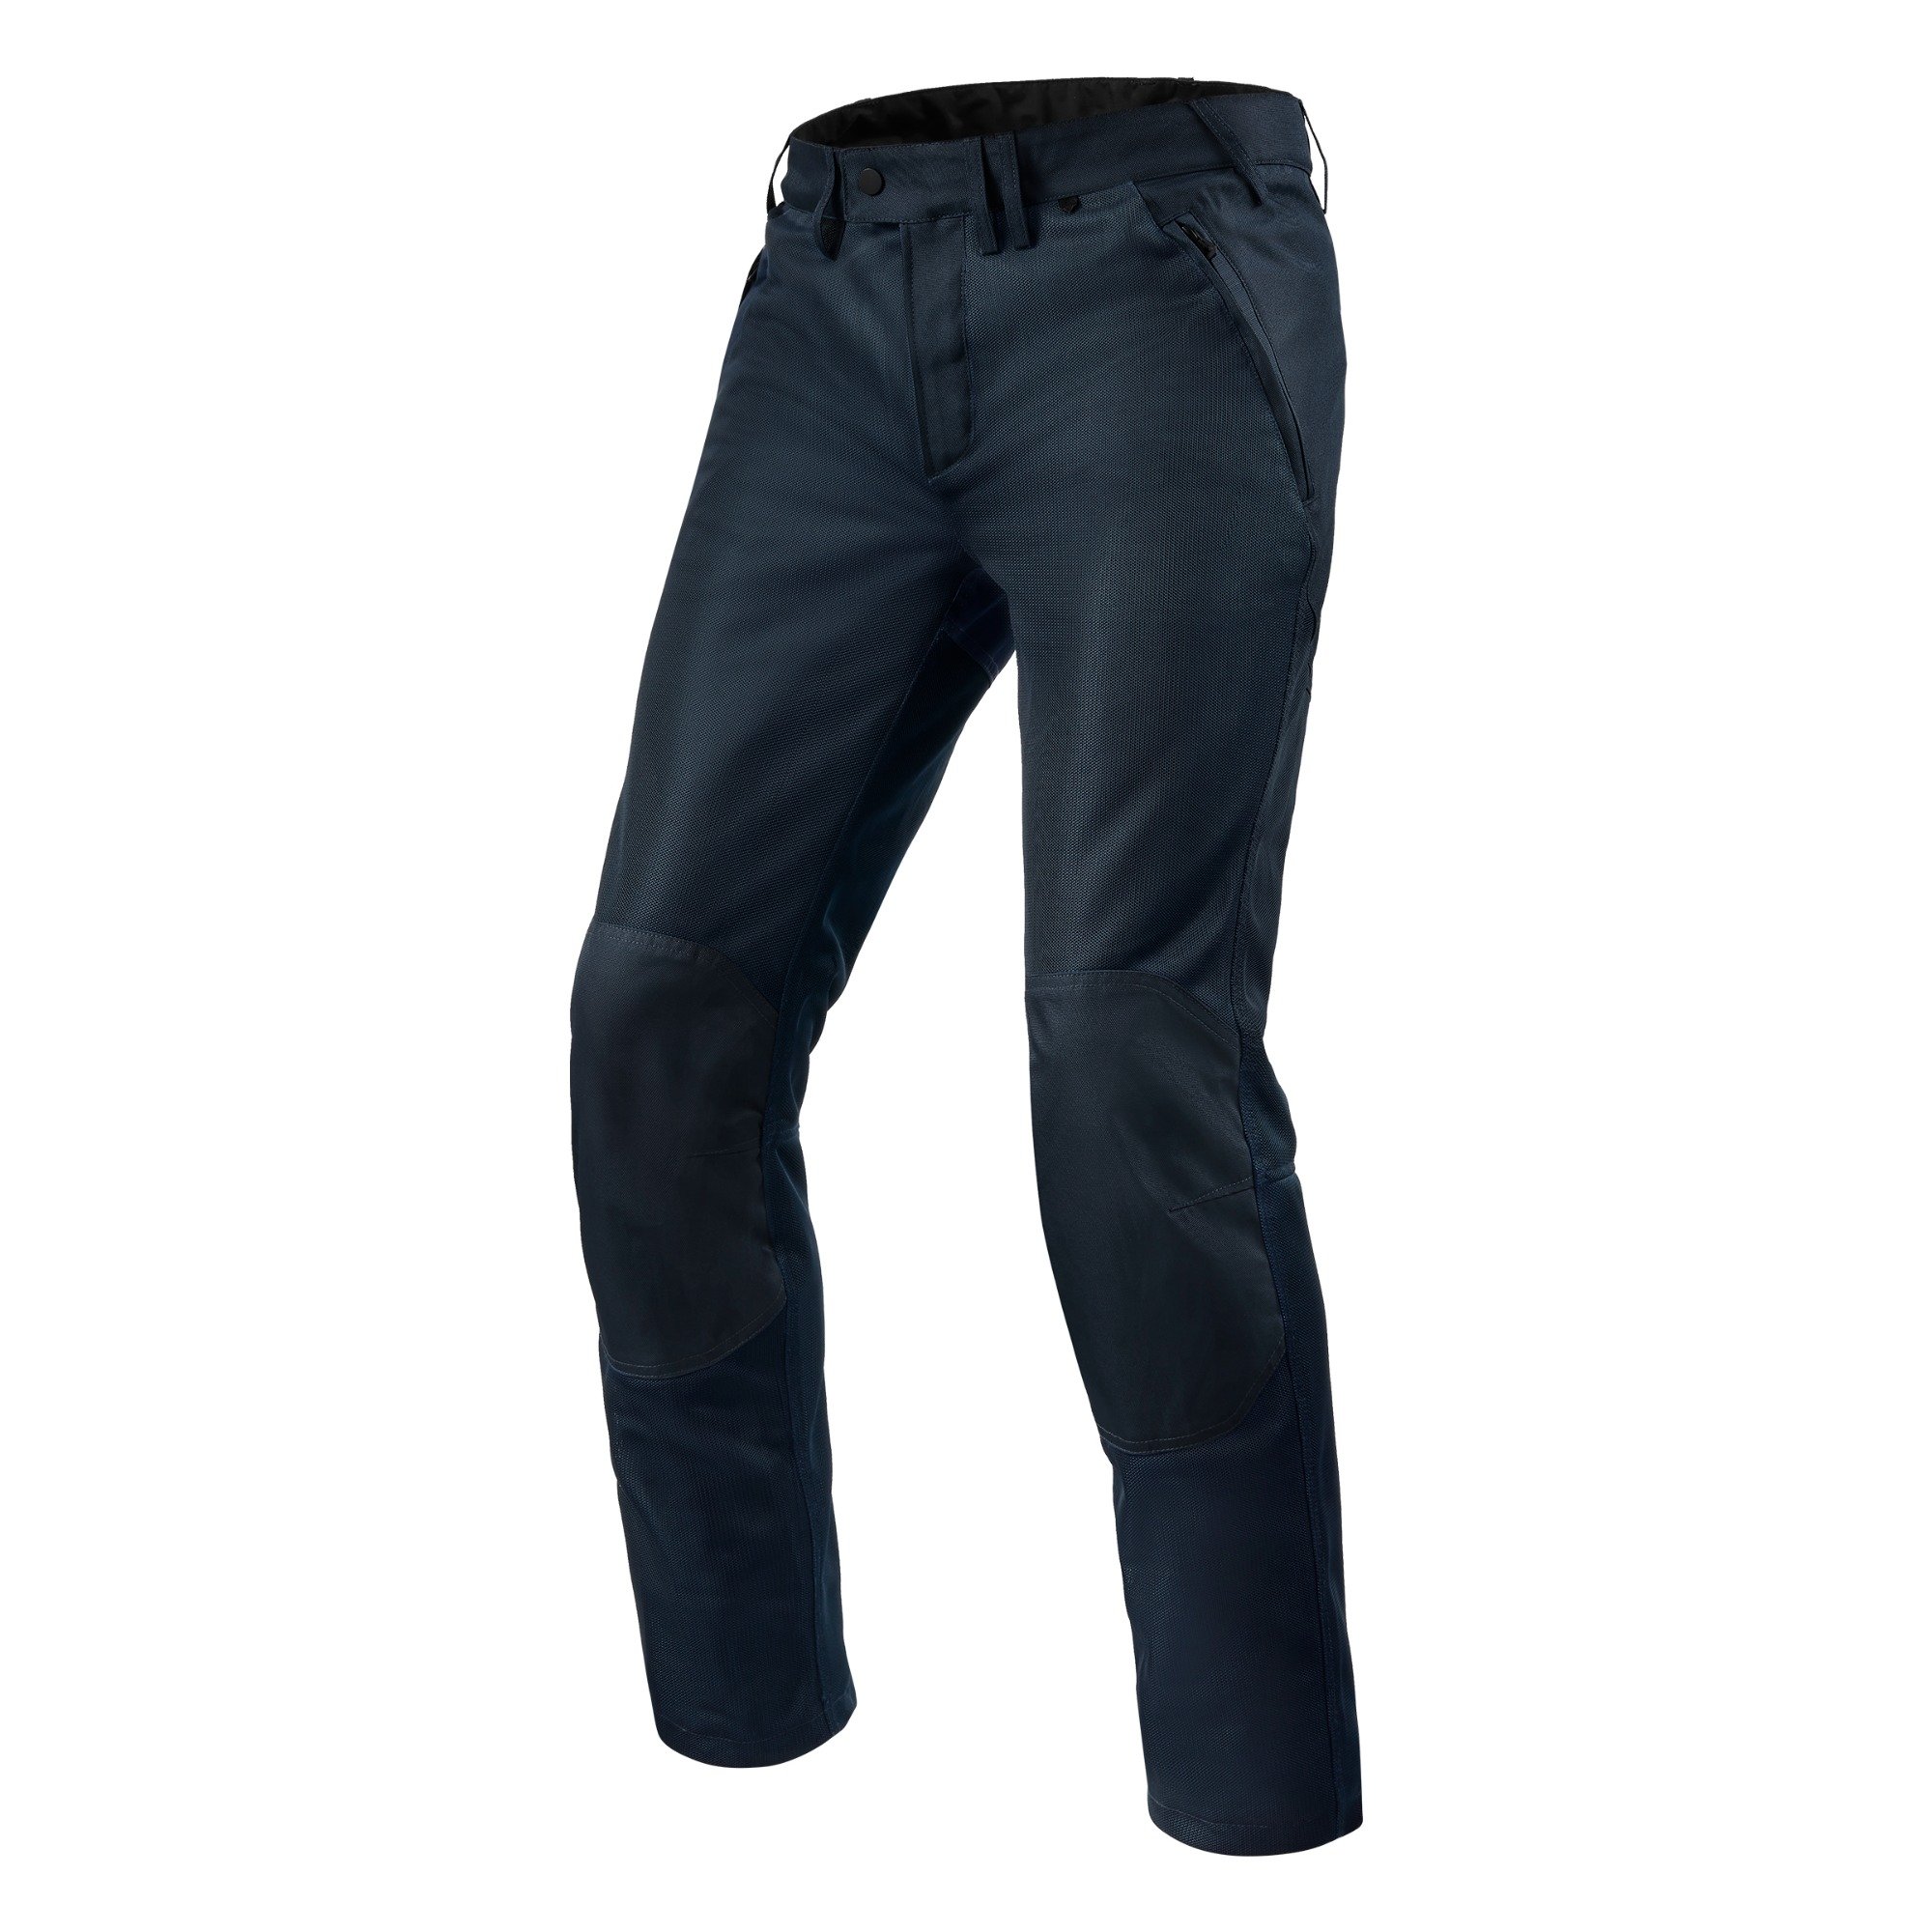 Image of REV'IT! Pants Eclipse 2 Dark Blue Standard Motorcycle Pants Size 3XL ID 8700001368971